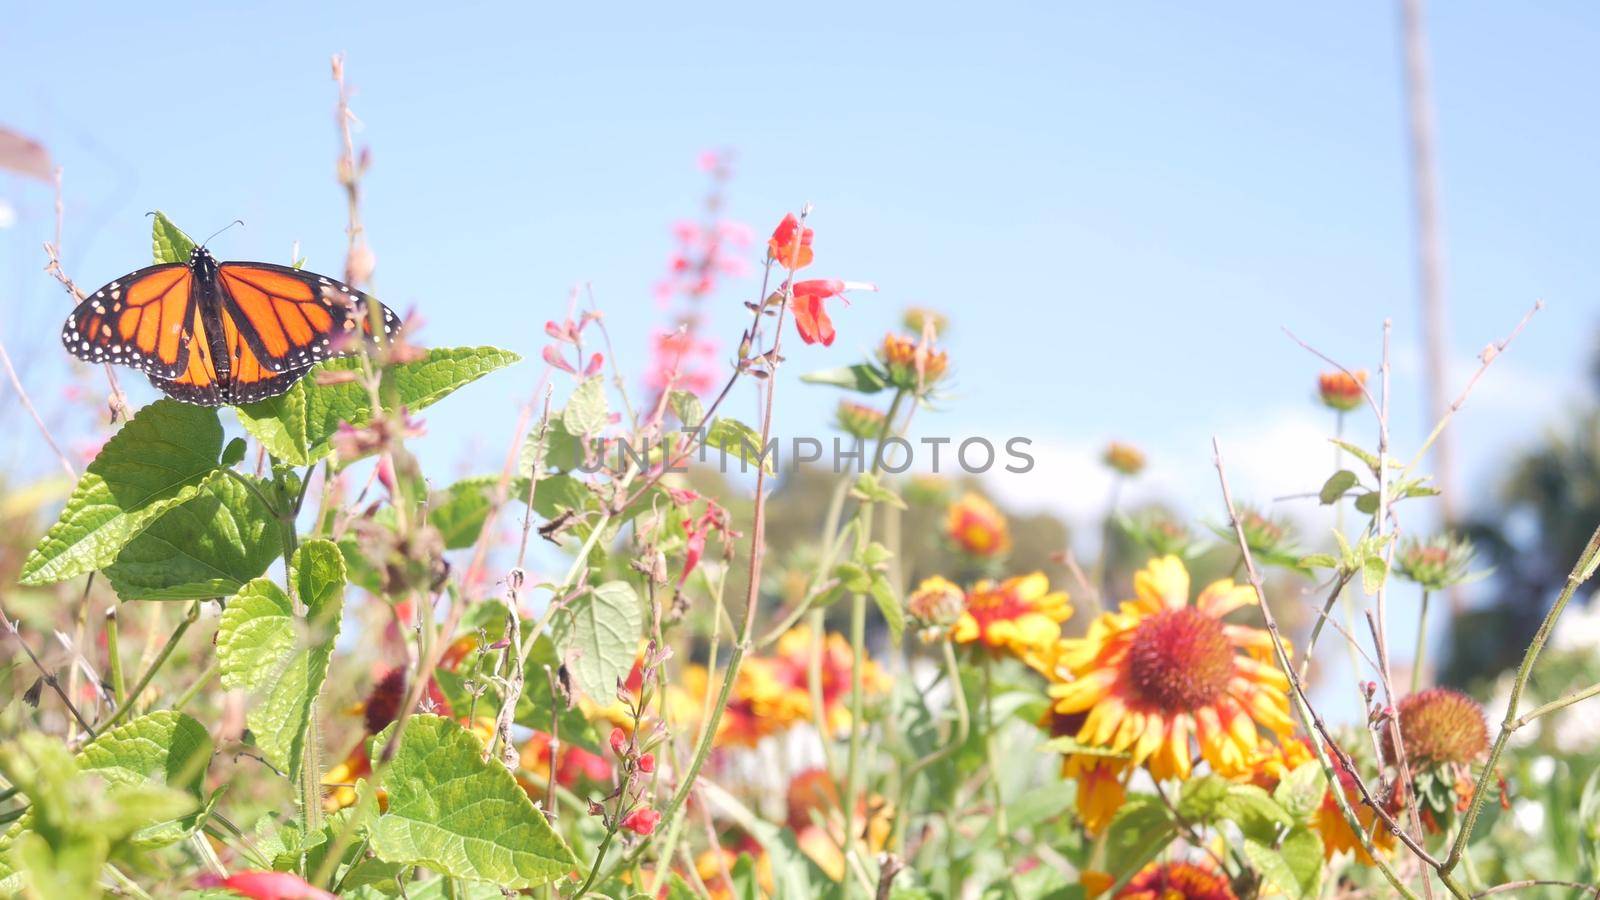 Monarch butterfly on wild flower, wildflowers bloom, garden or medow, spring sky by DogoraSun